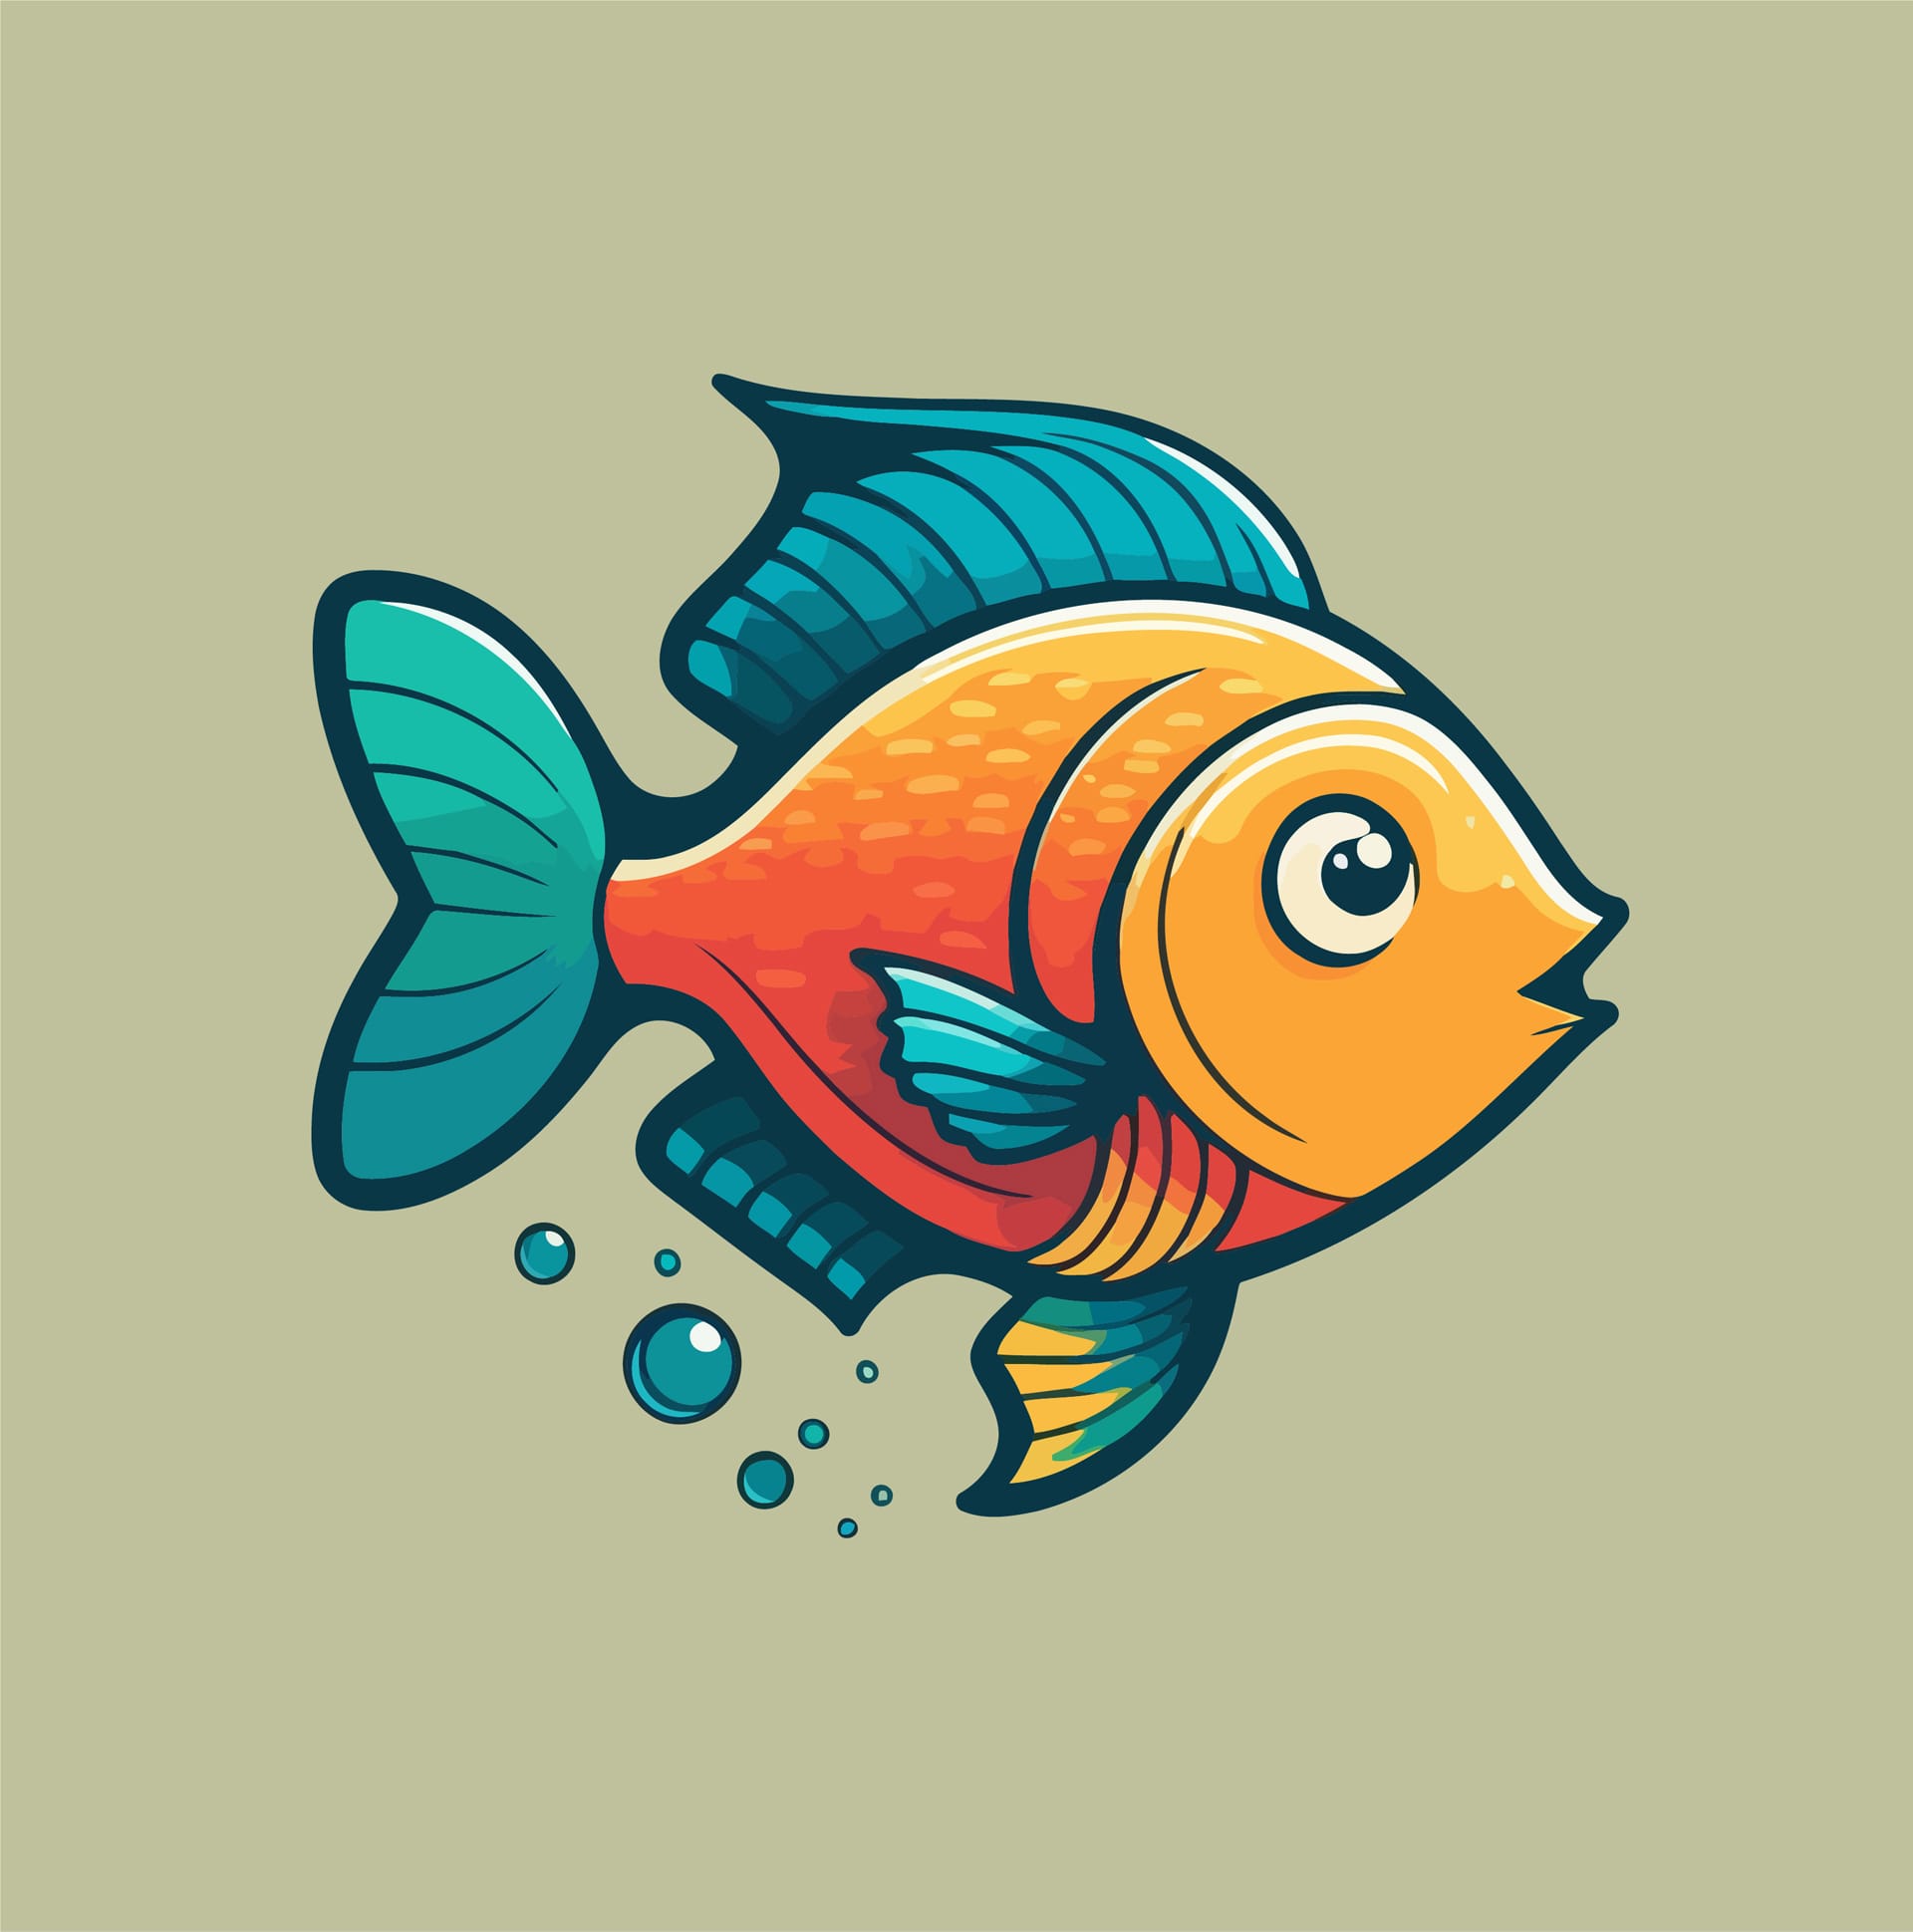 Cute fish cartoon illustration sea animal logo icon mascot image